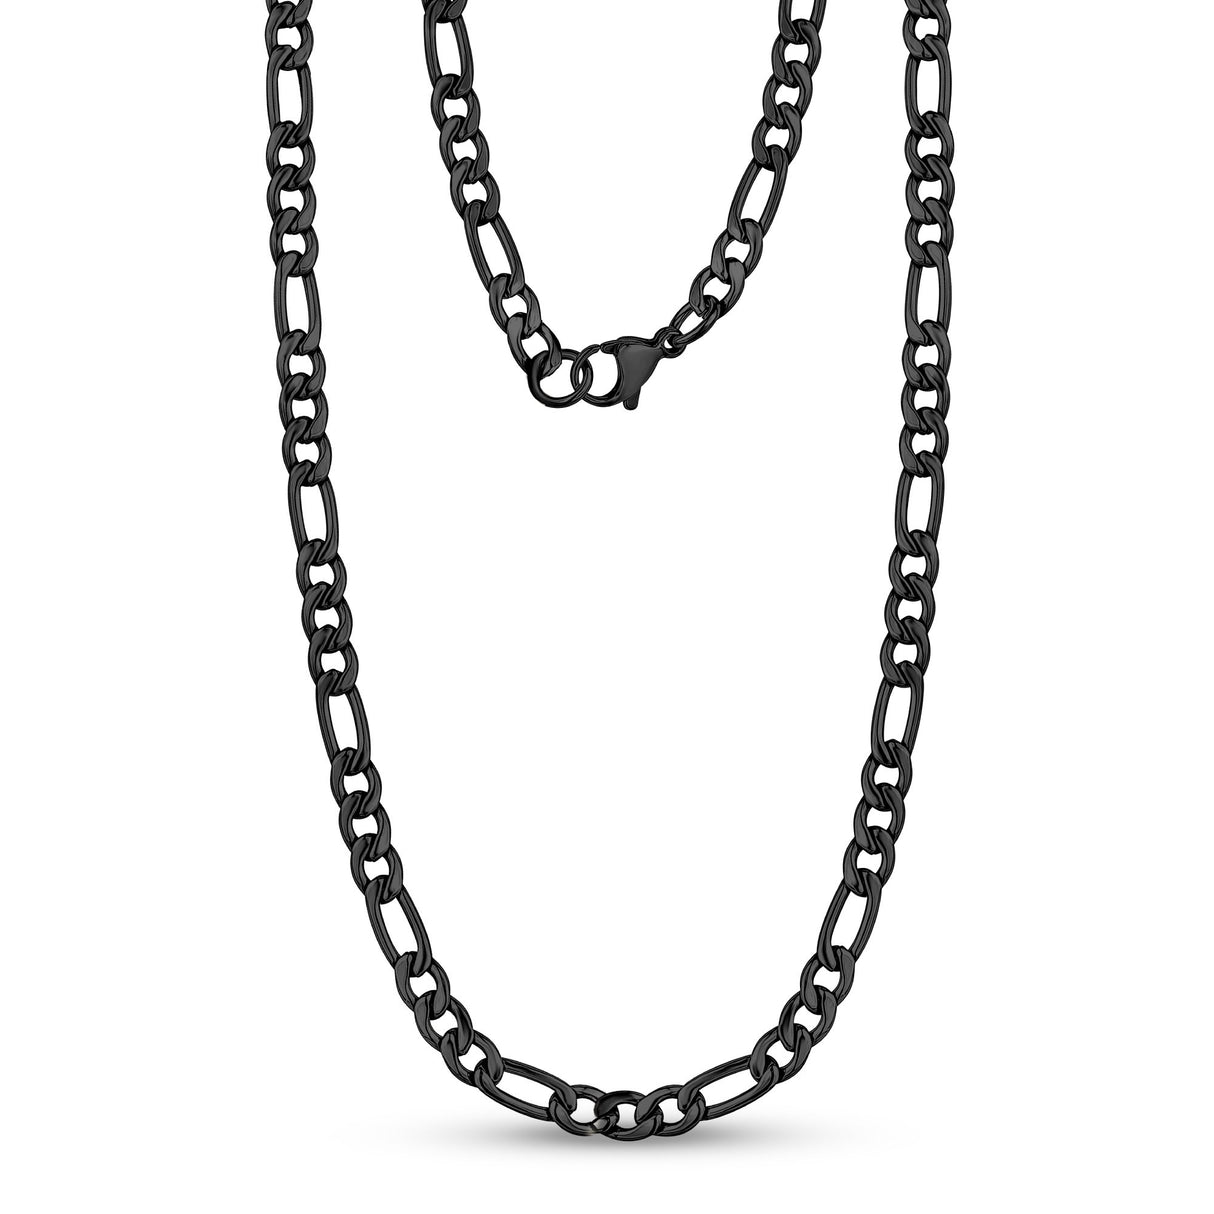 Colliers unisexes - Collier à maillons Figaro en acier inoxydable noir 5 mm